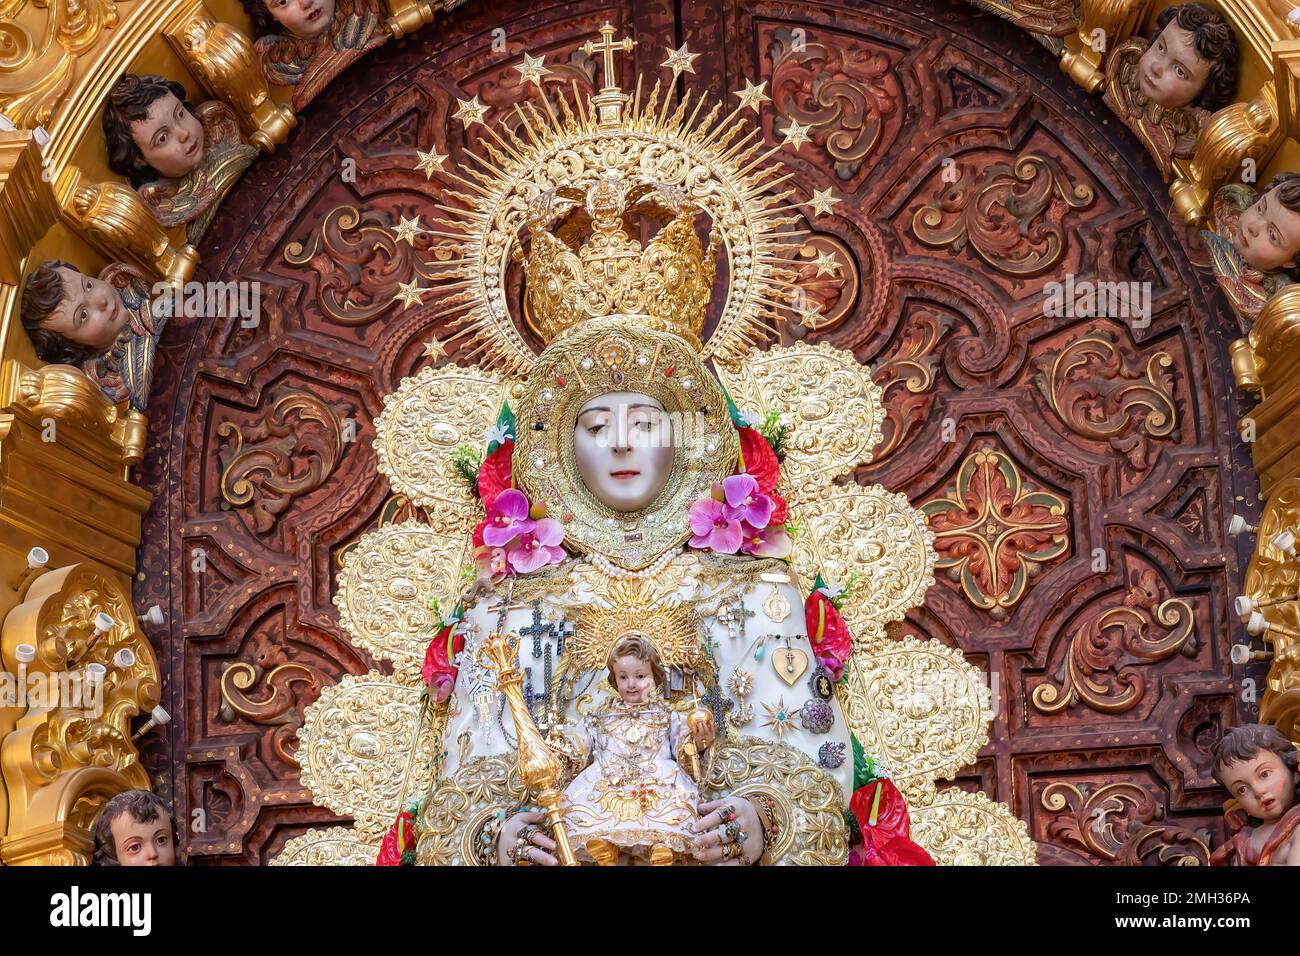 Image of the Virgen del Rocio, La Divina Pastora, The divine shepherdess,inside of the Ermita del Rocio, hermitage in Almonte, in Huelva, Spain Stock Photo